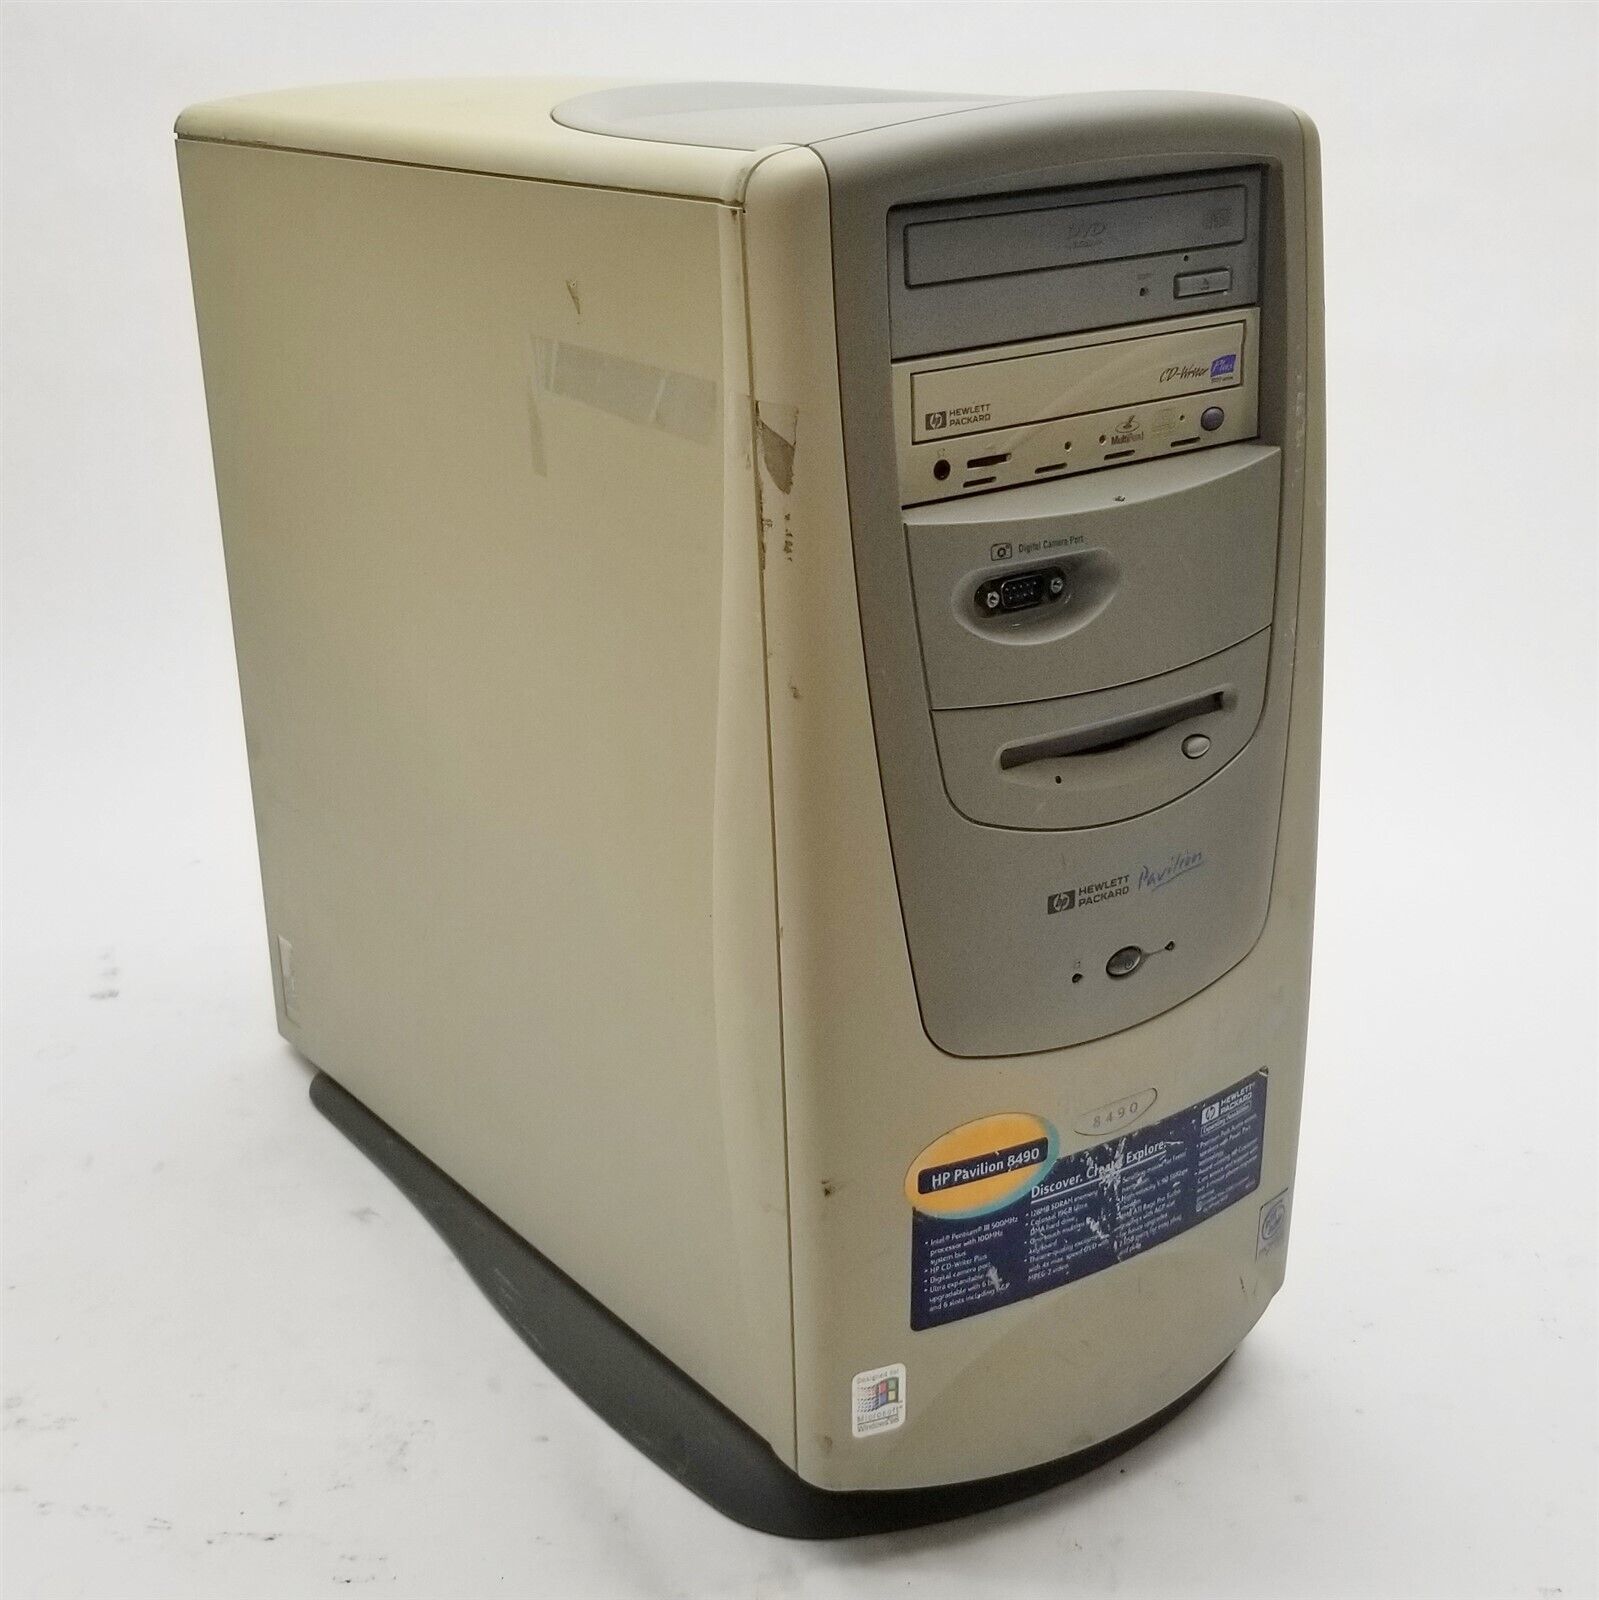 HP Pavilion 8490 Pentium III 500MHz 128MB SDRAM No HDD Retro PC Vintage Desktop